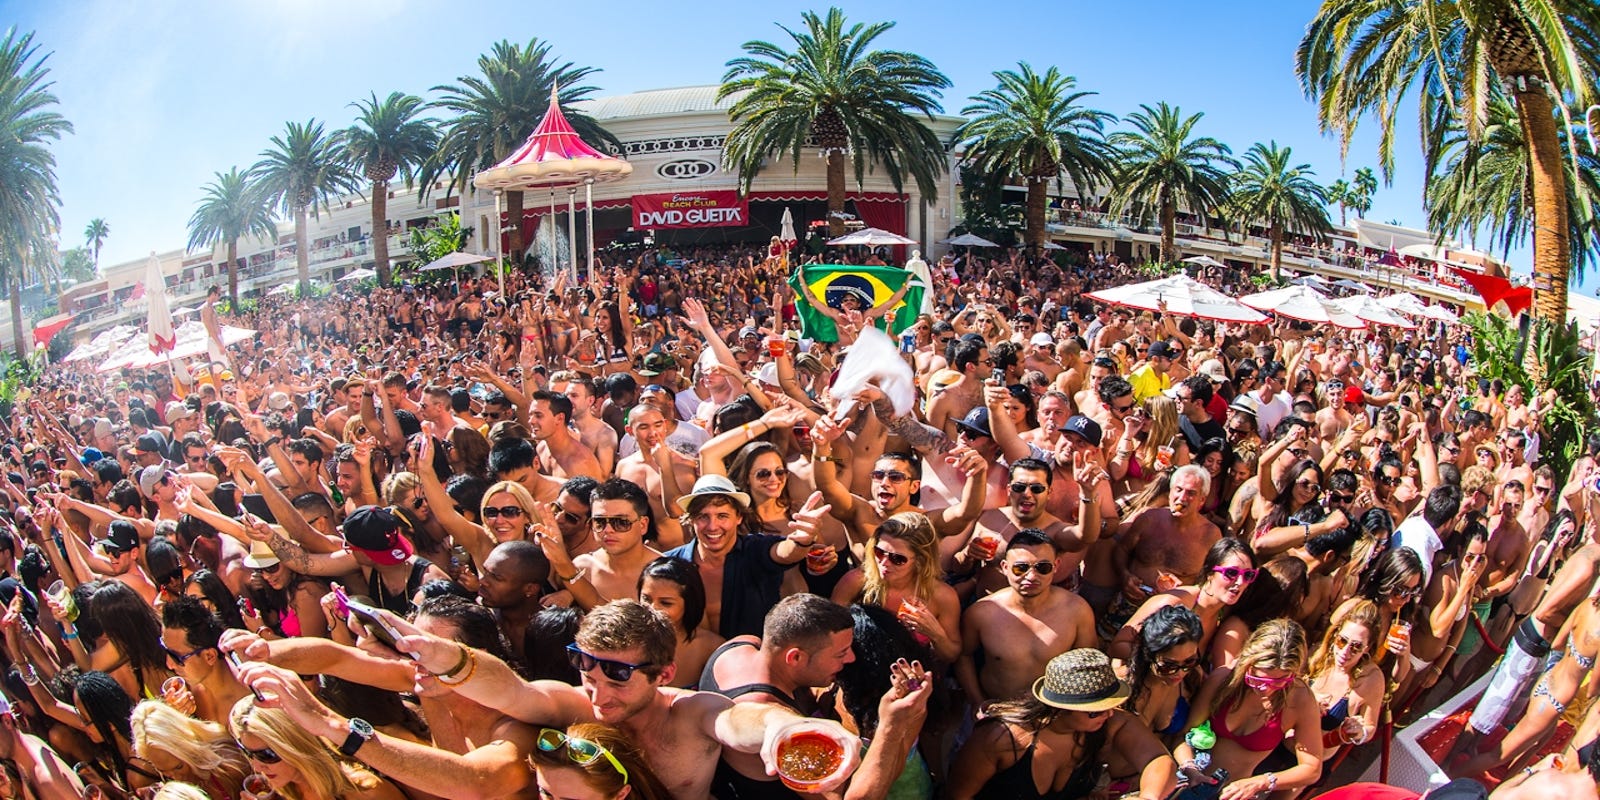 Beach Party Models Topless - Las Vegas: Pool-party season is in full swing; 9 pools are ...